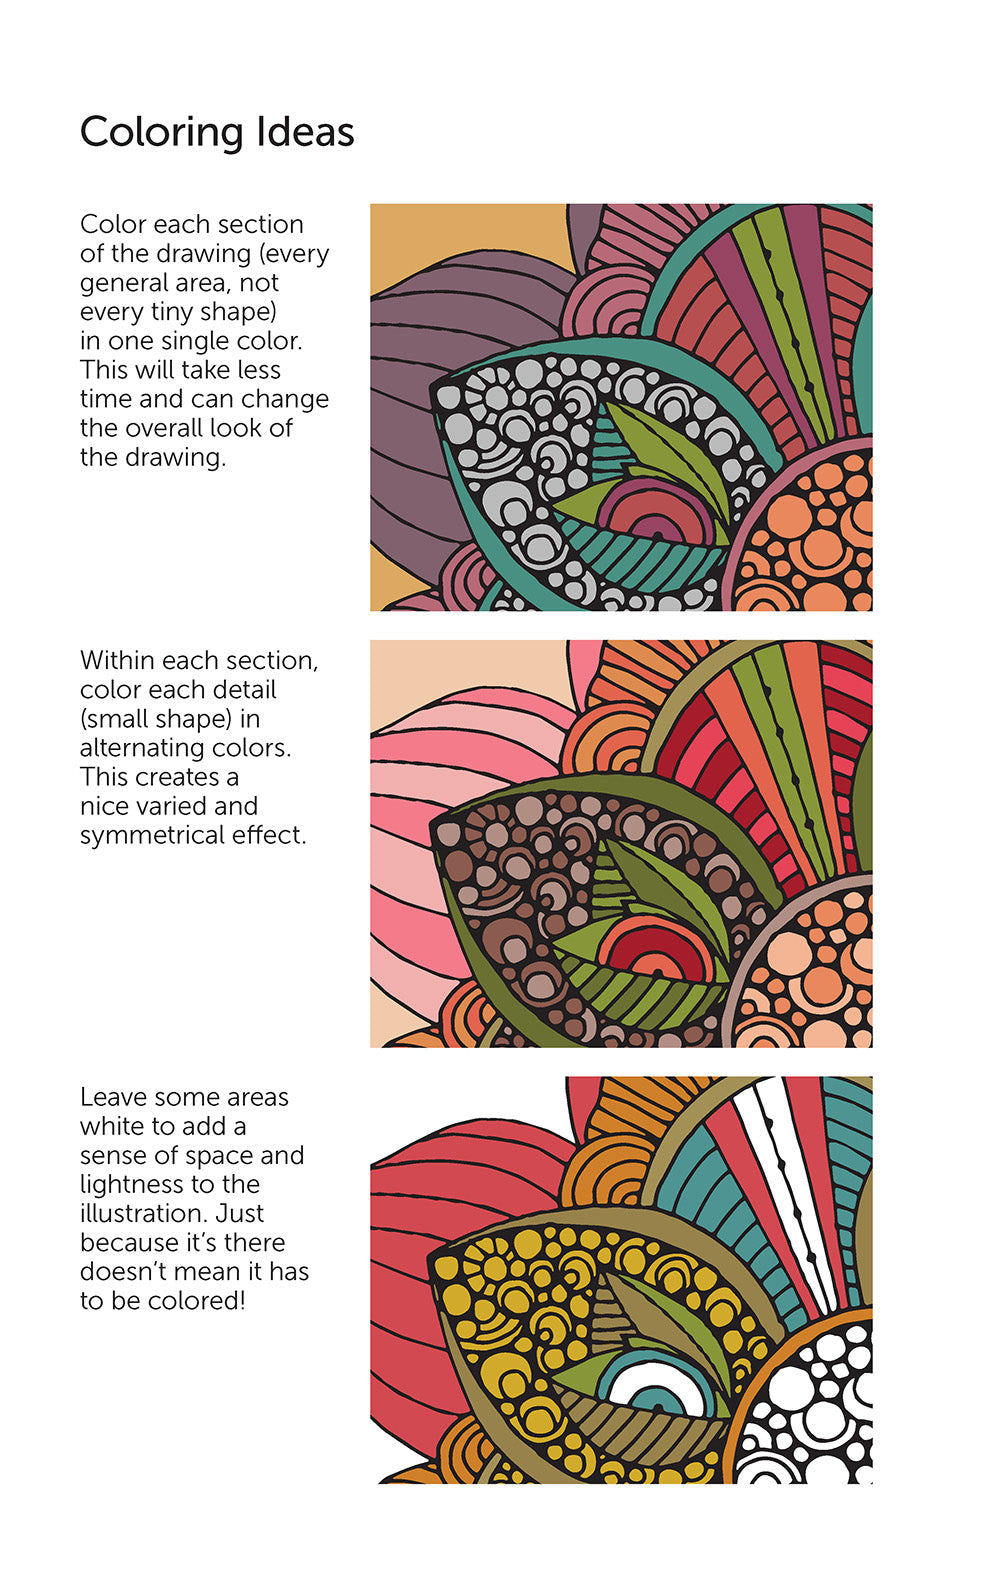 Color Zen Coloring Book